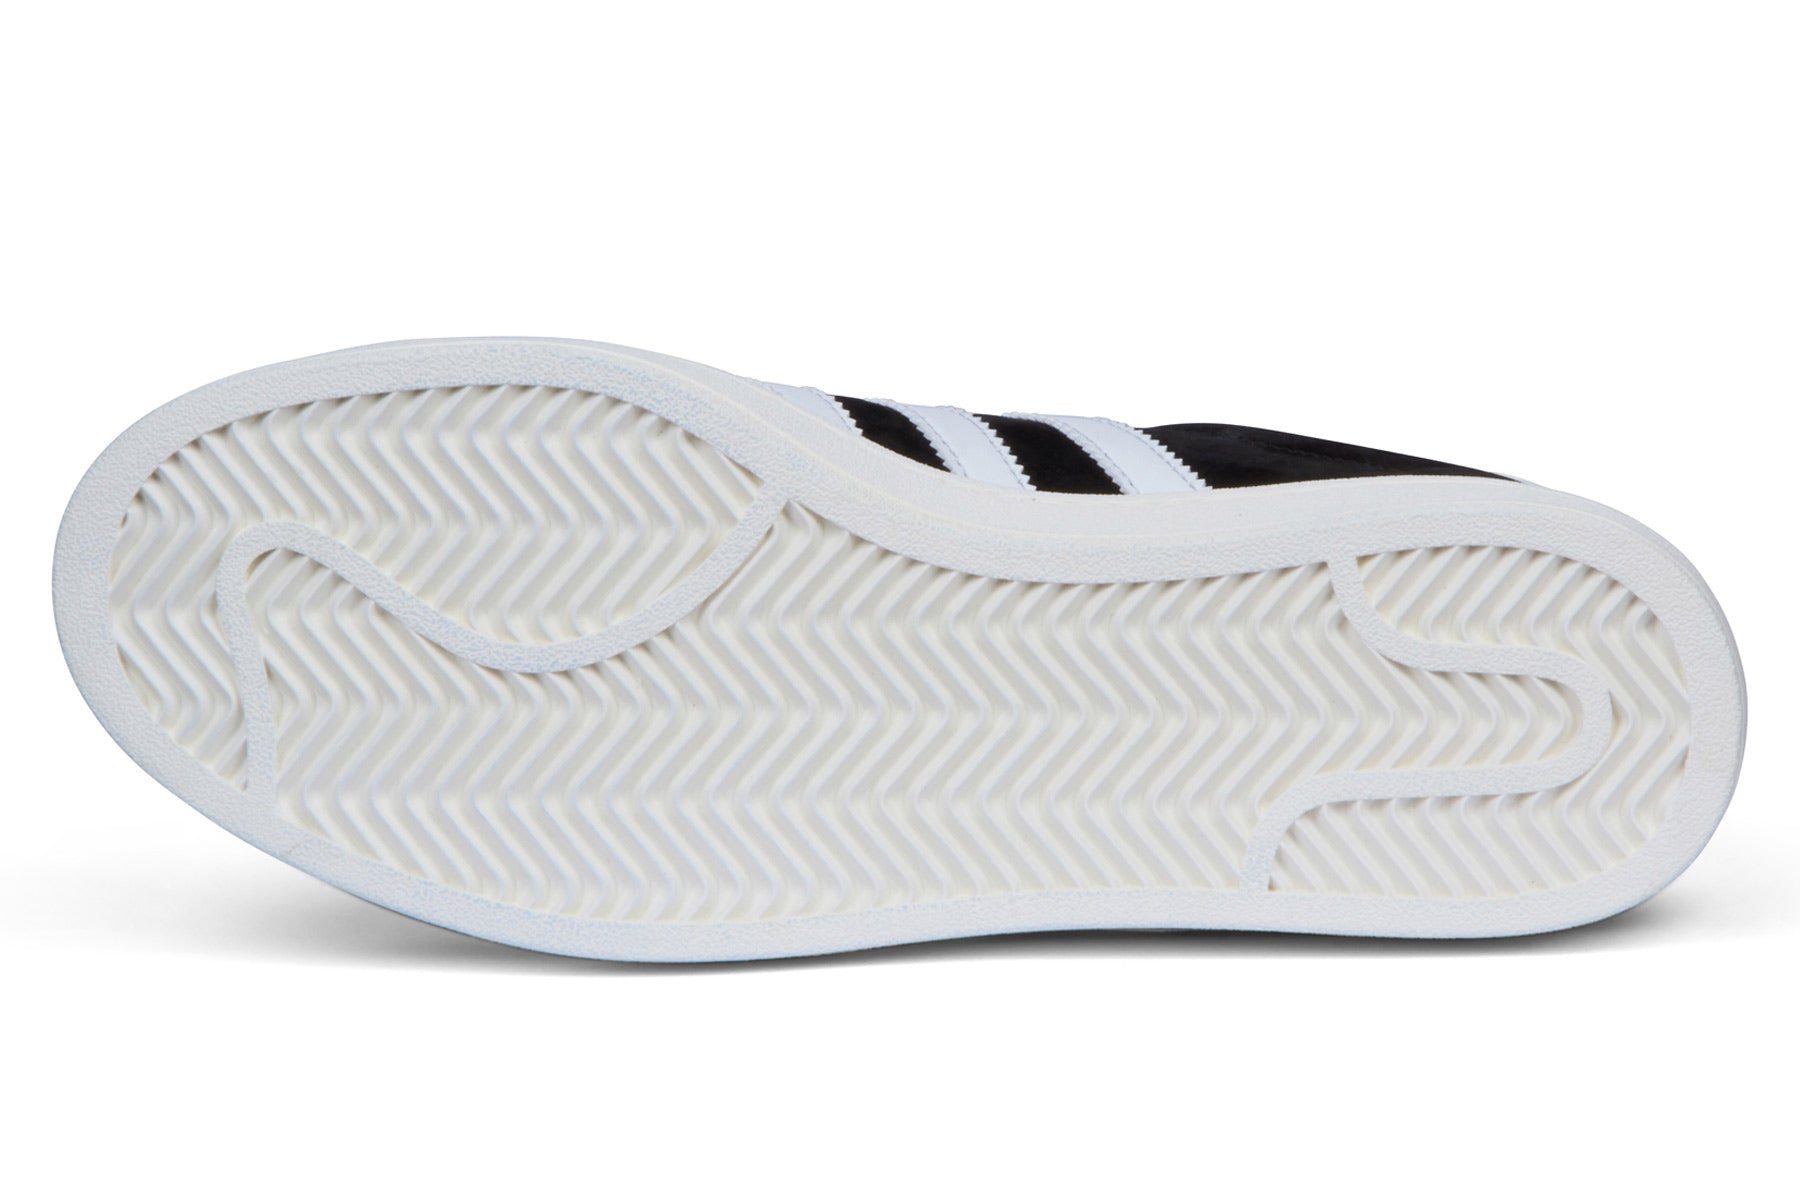 Adidas Campus - Black / Footwear White / Chalk White